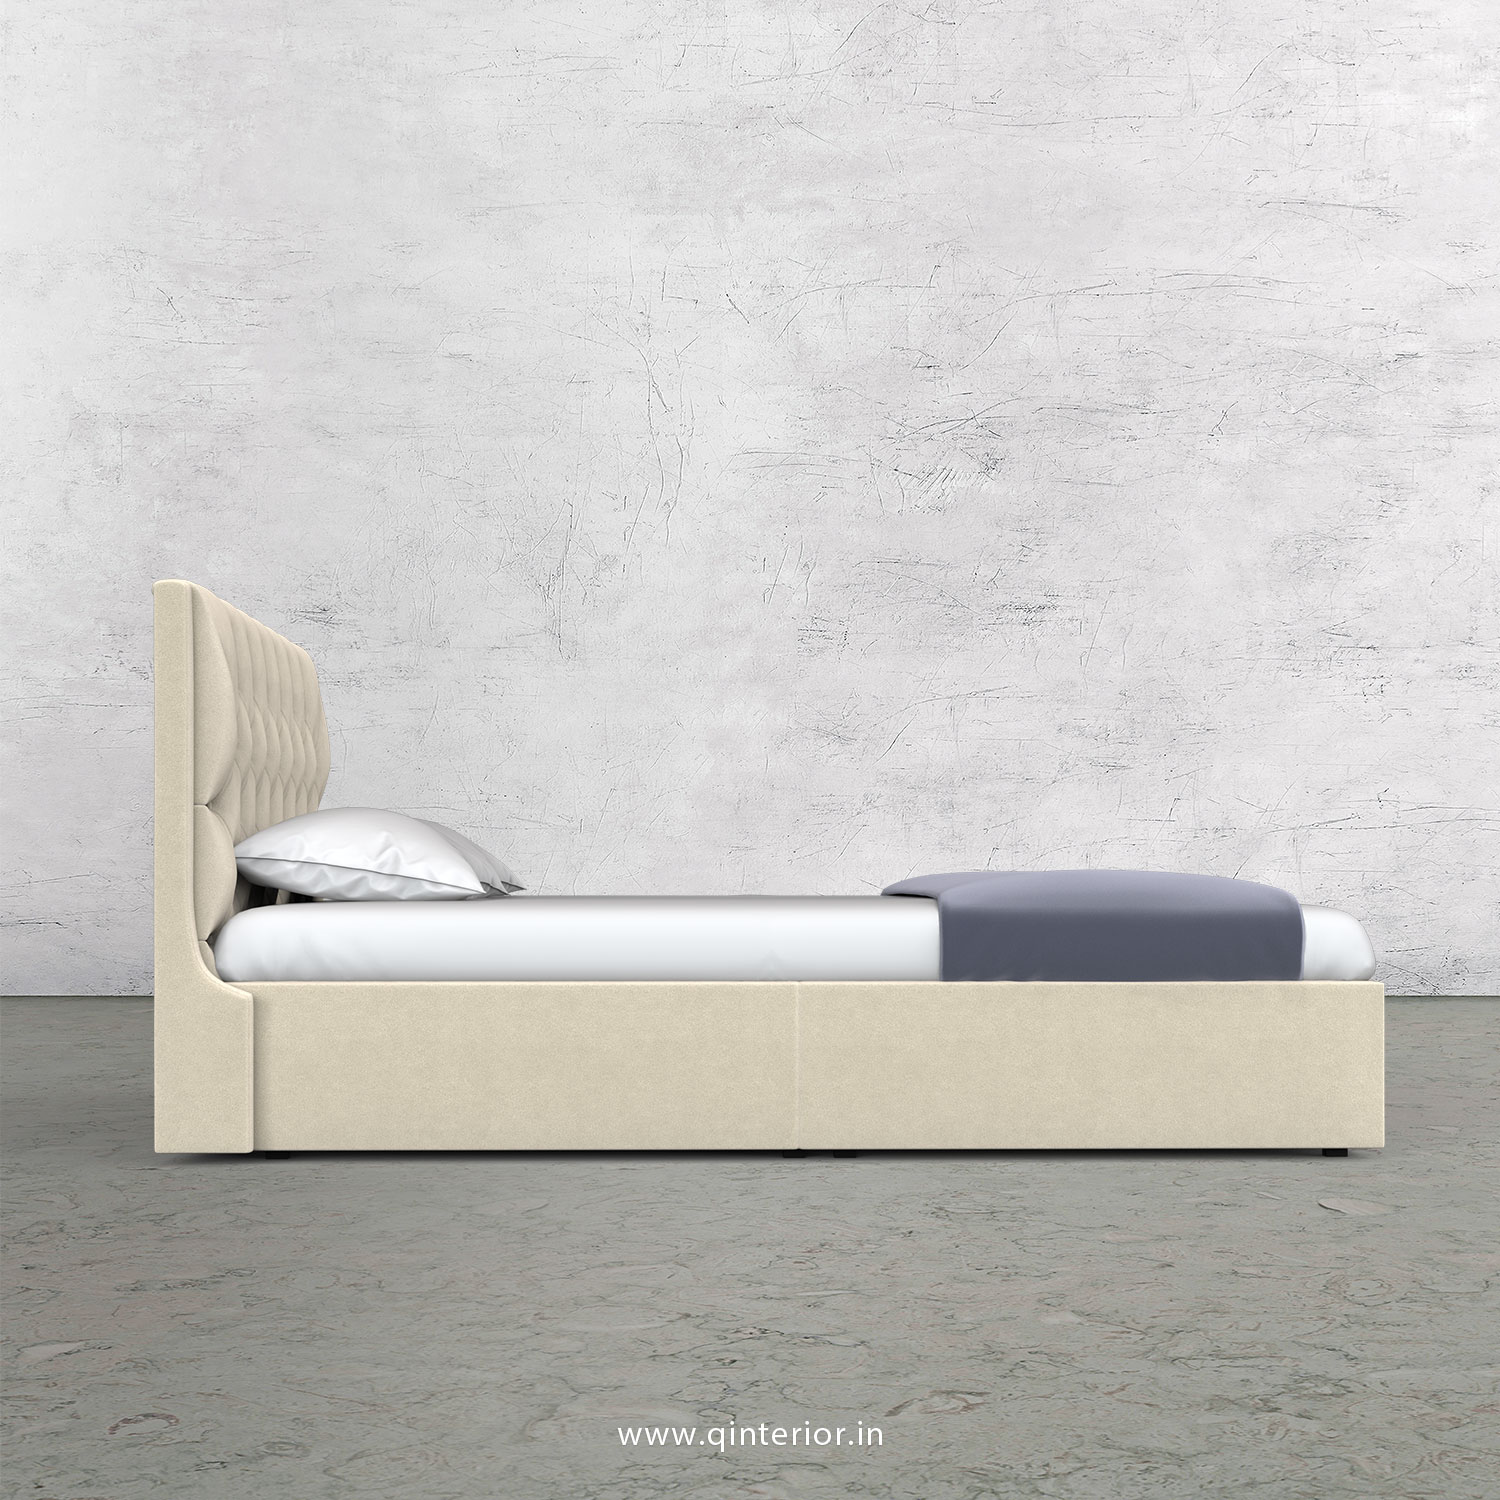 Scorpius King Size Storage Bed in Velvet Fabric - KBD001 VL01